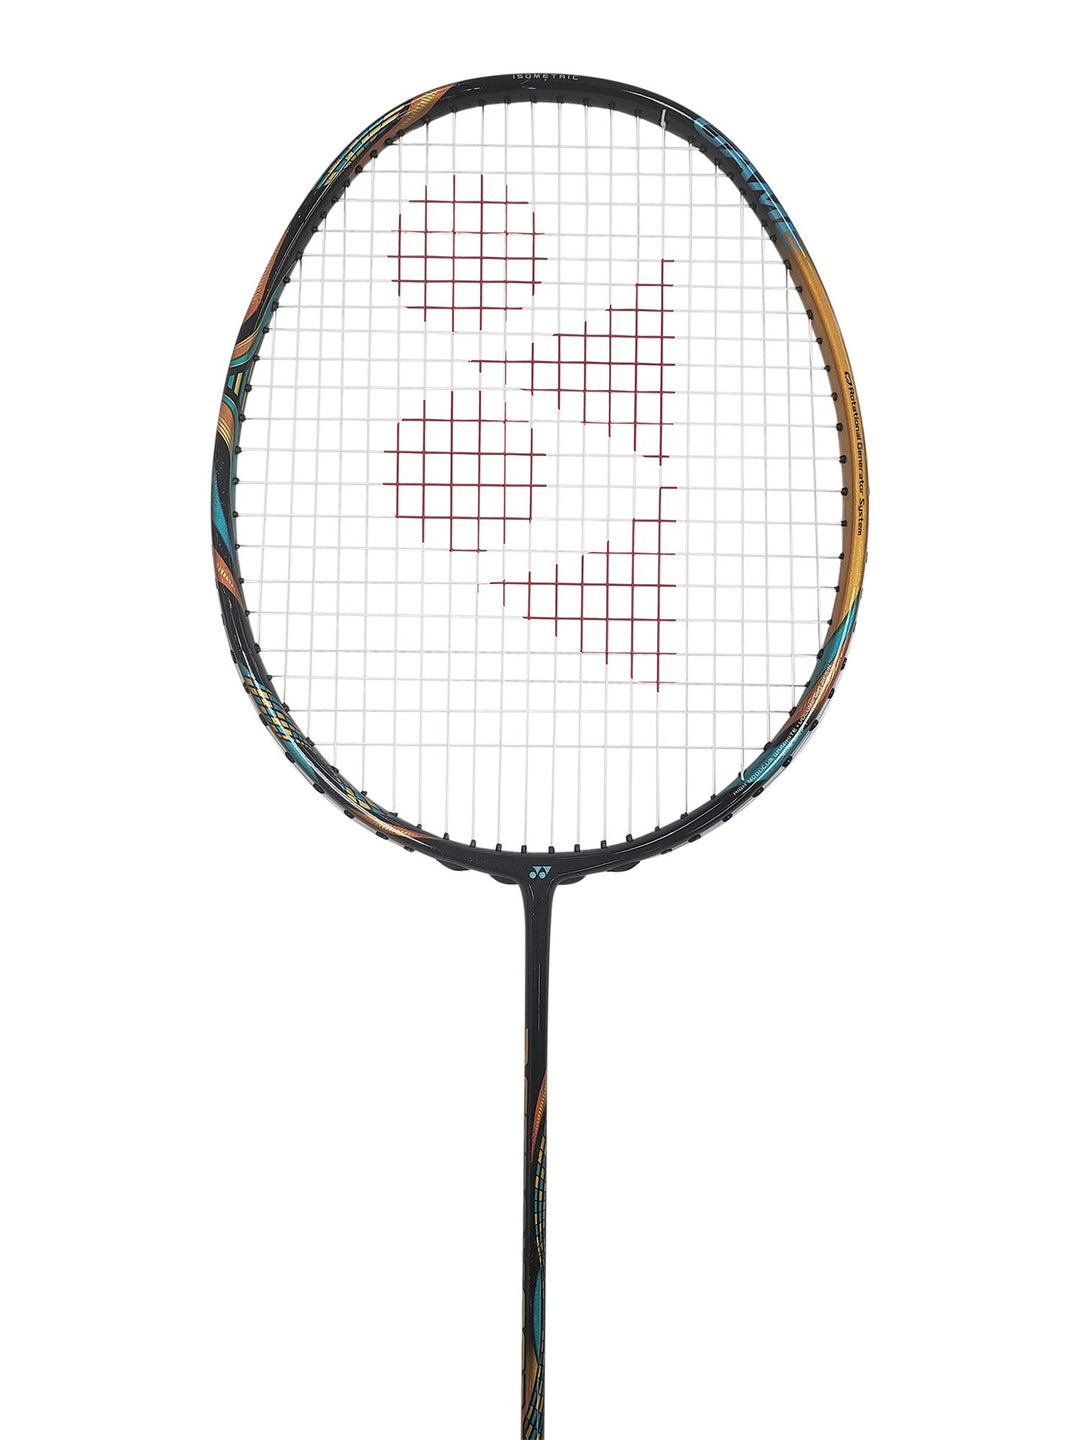 Astrox 88D game badminton racket. Head heavy attack oriented badminton racket